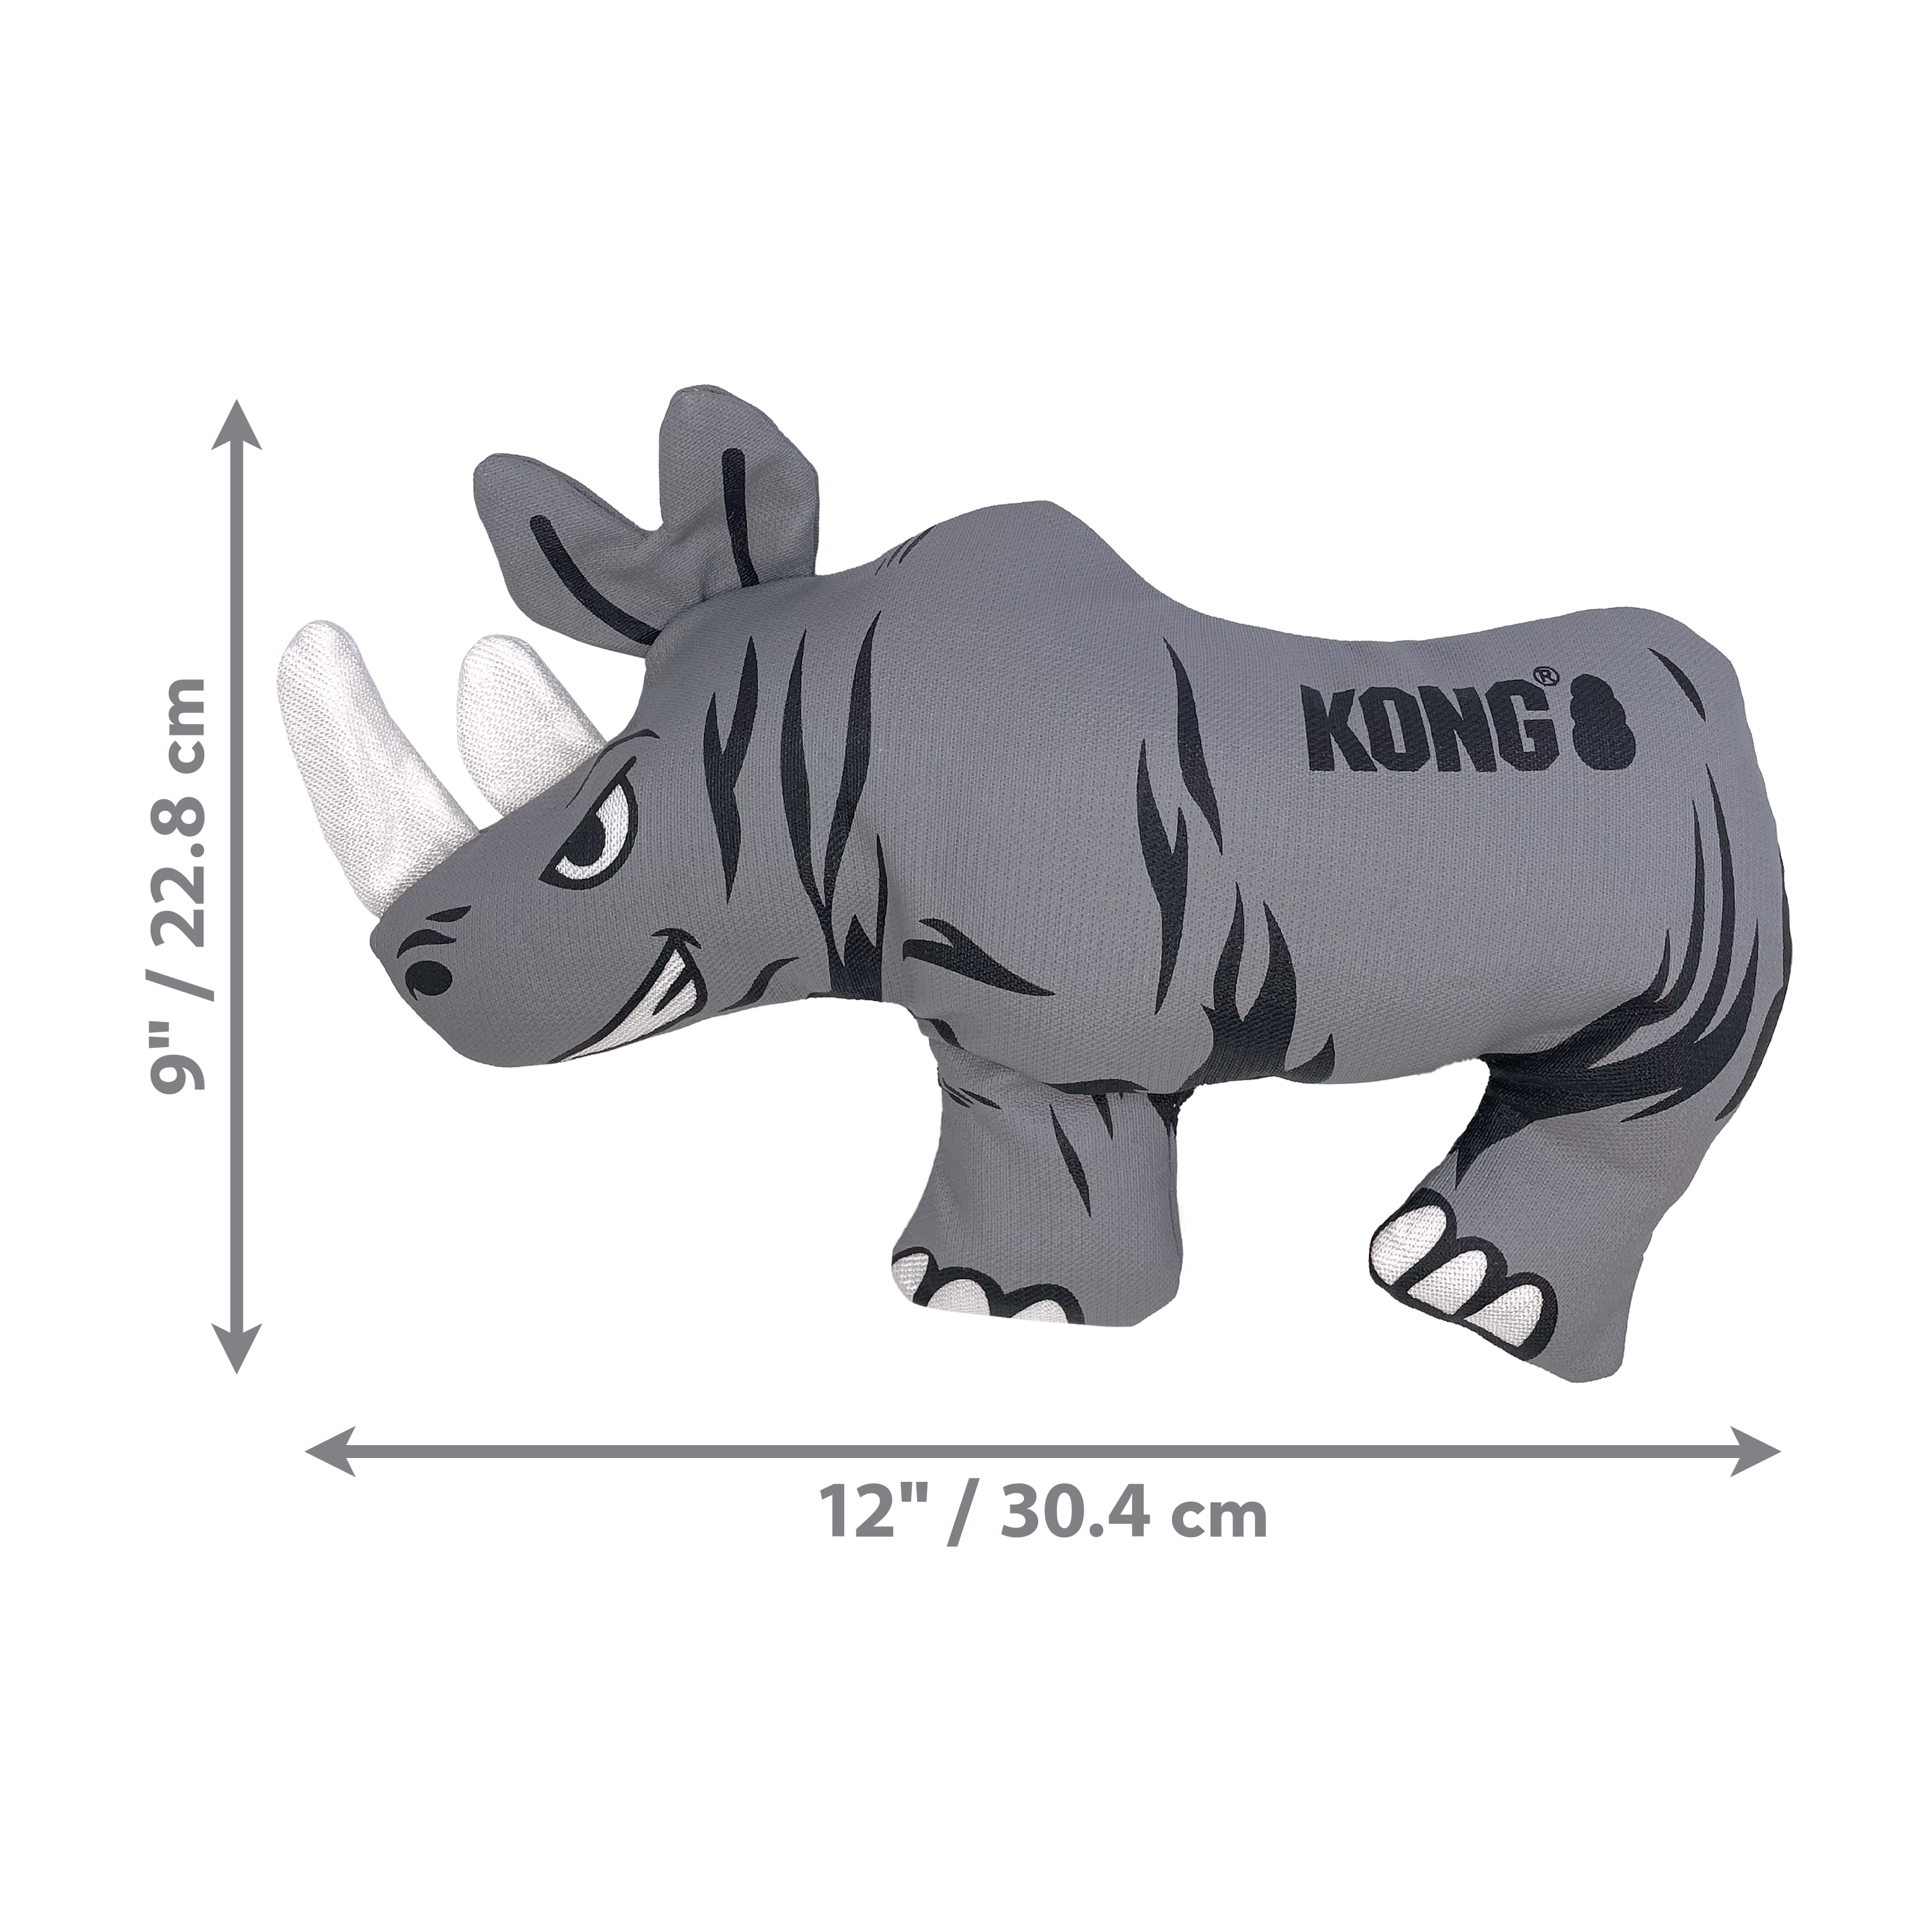 Maxx Rhino dimoffpack image du produit